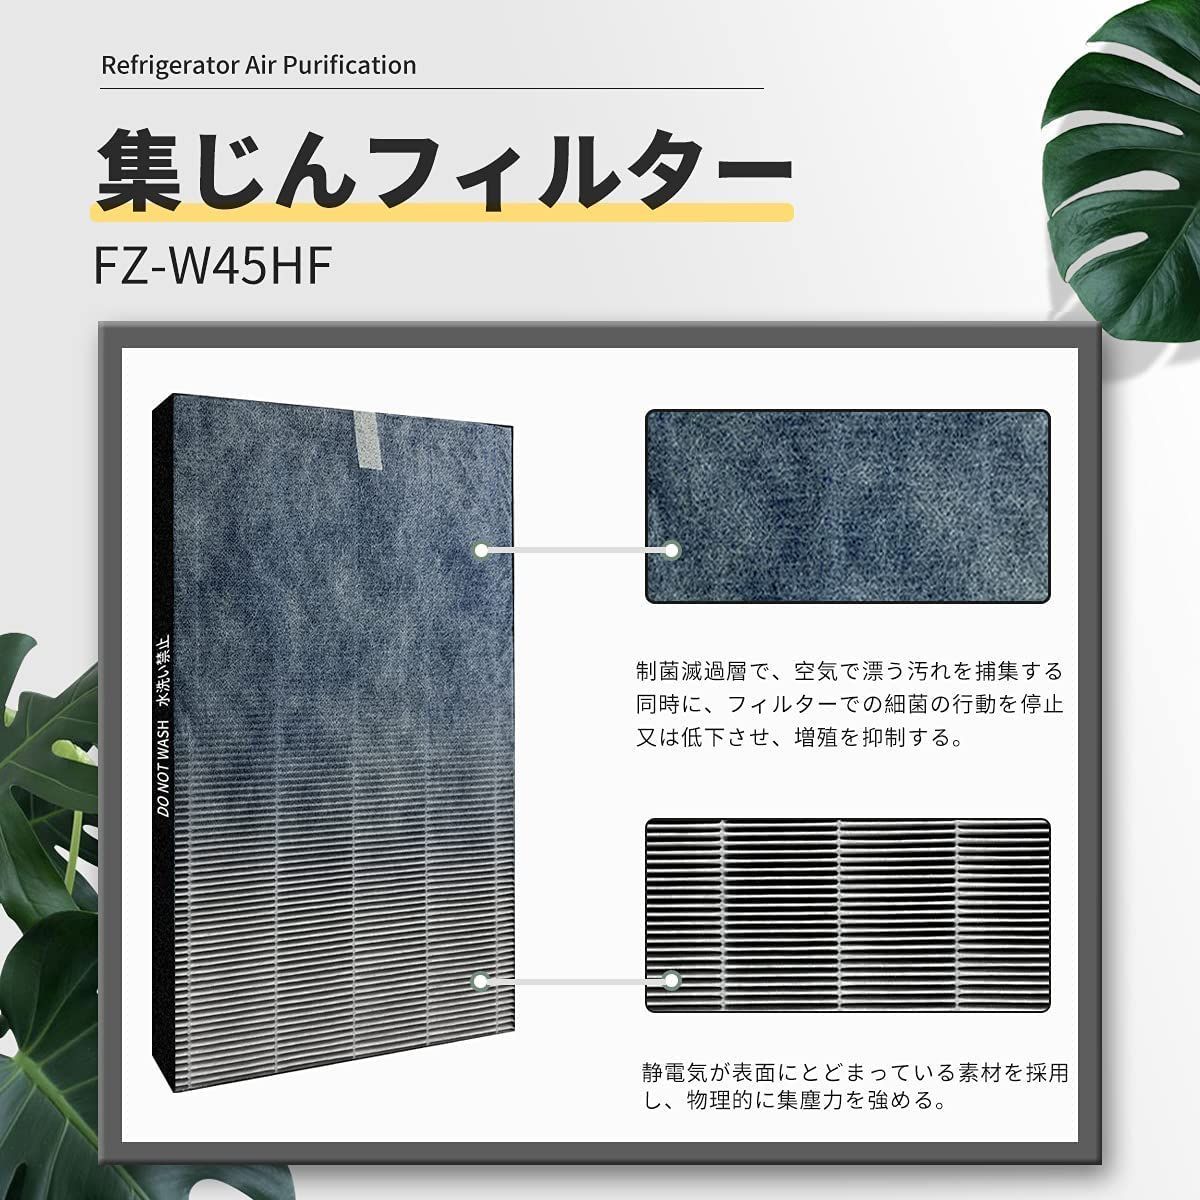 新着商品 SHARP 加湿空気清浄機 集塵フィルター FZ-W45HF sushitai.com.mx